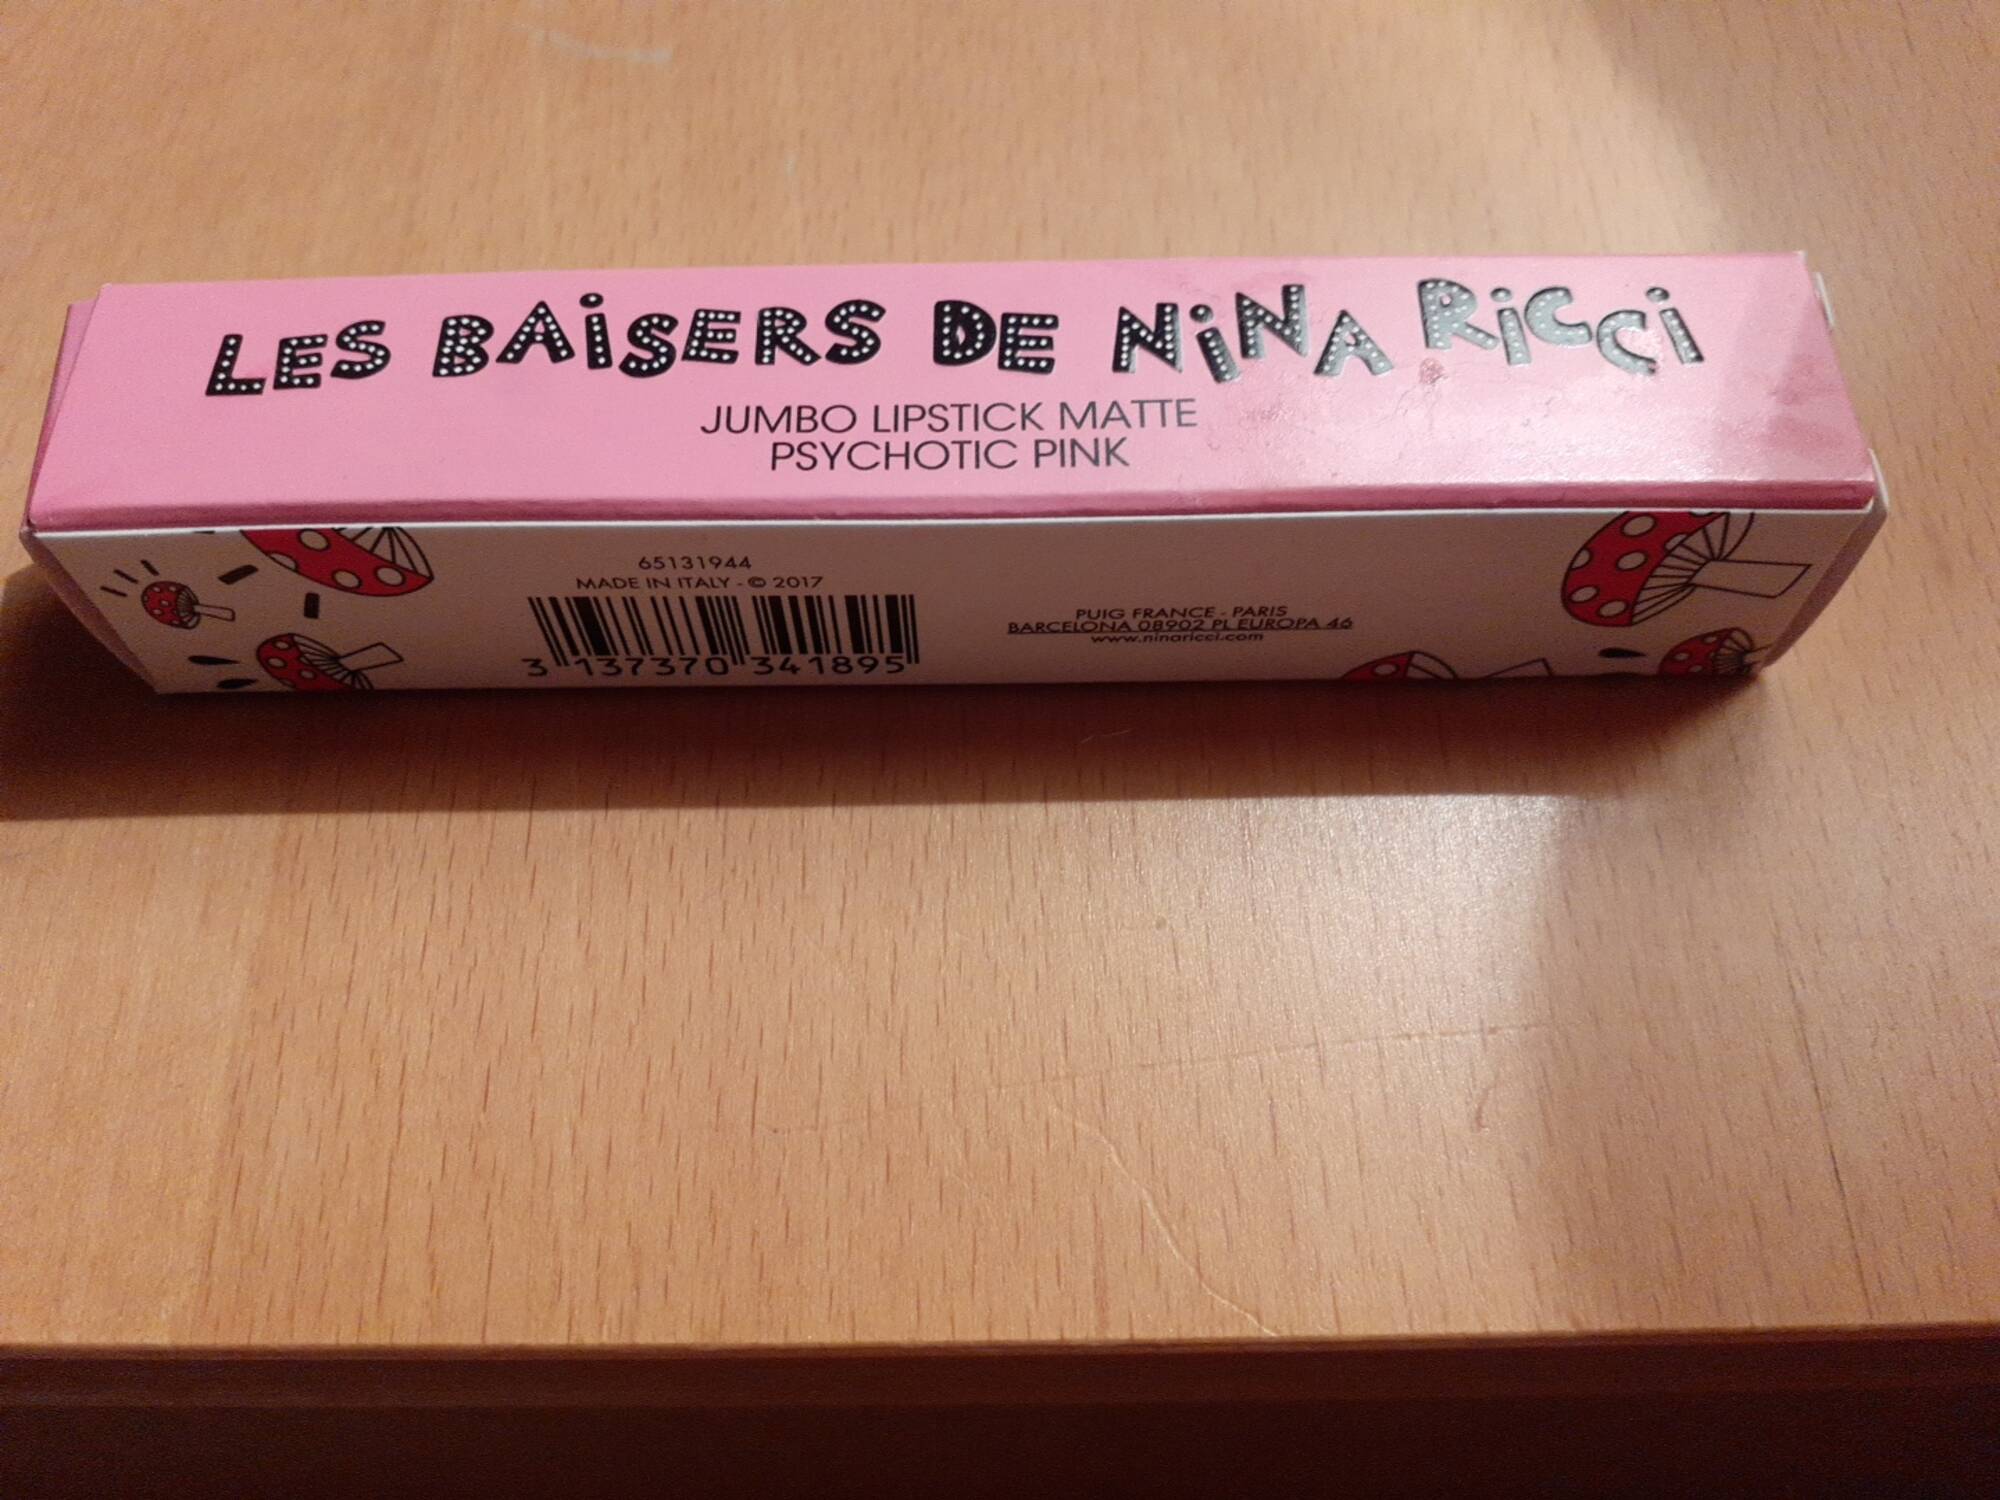 NINA RICCI - Les baisers de Nina Ricci - Jumbo lipstick matte